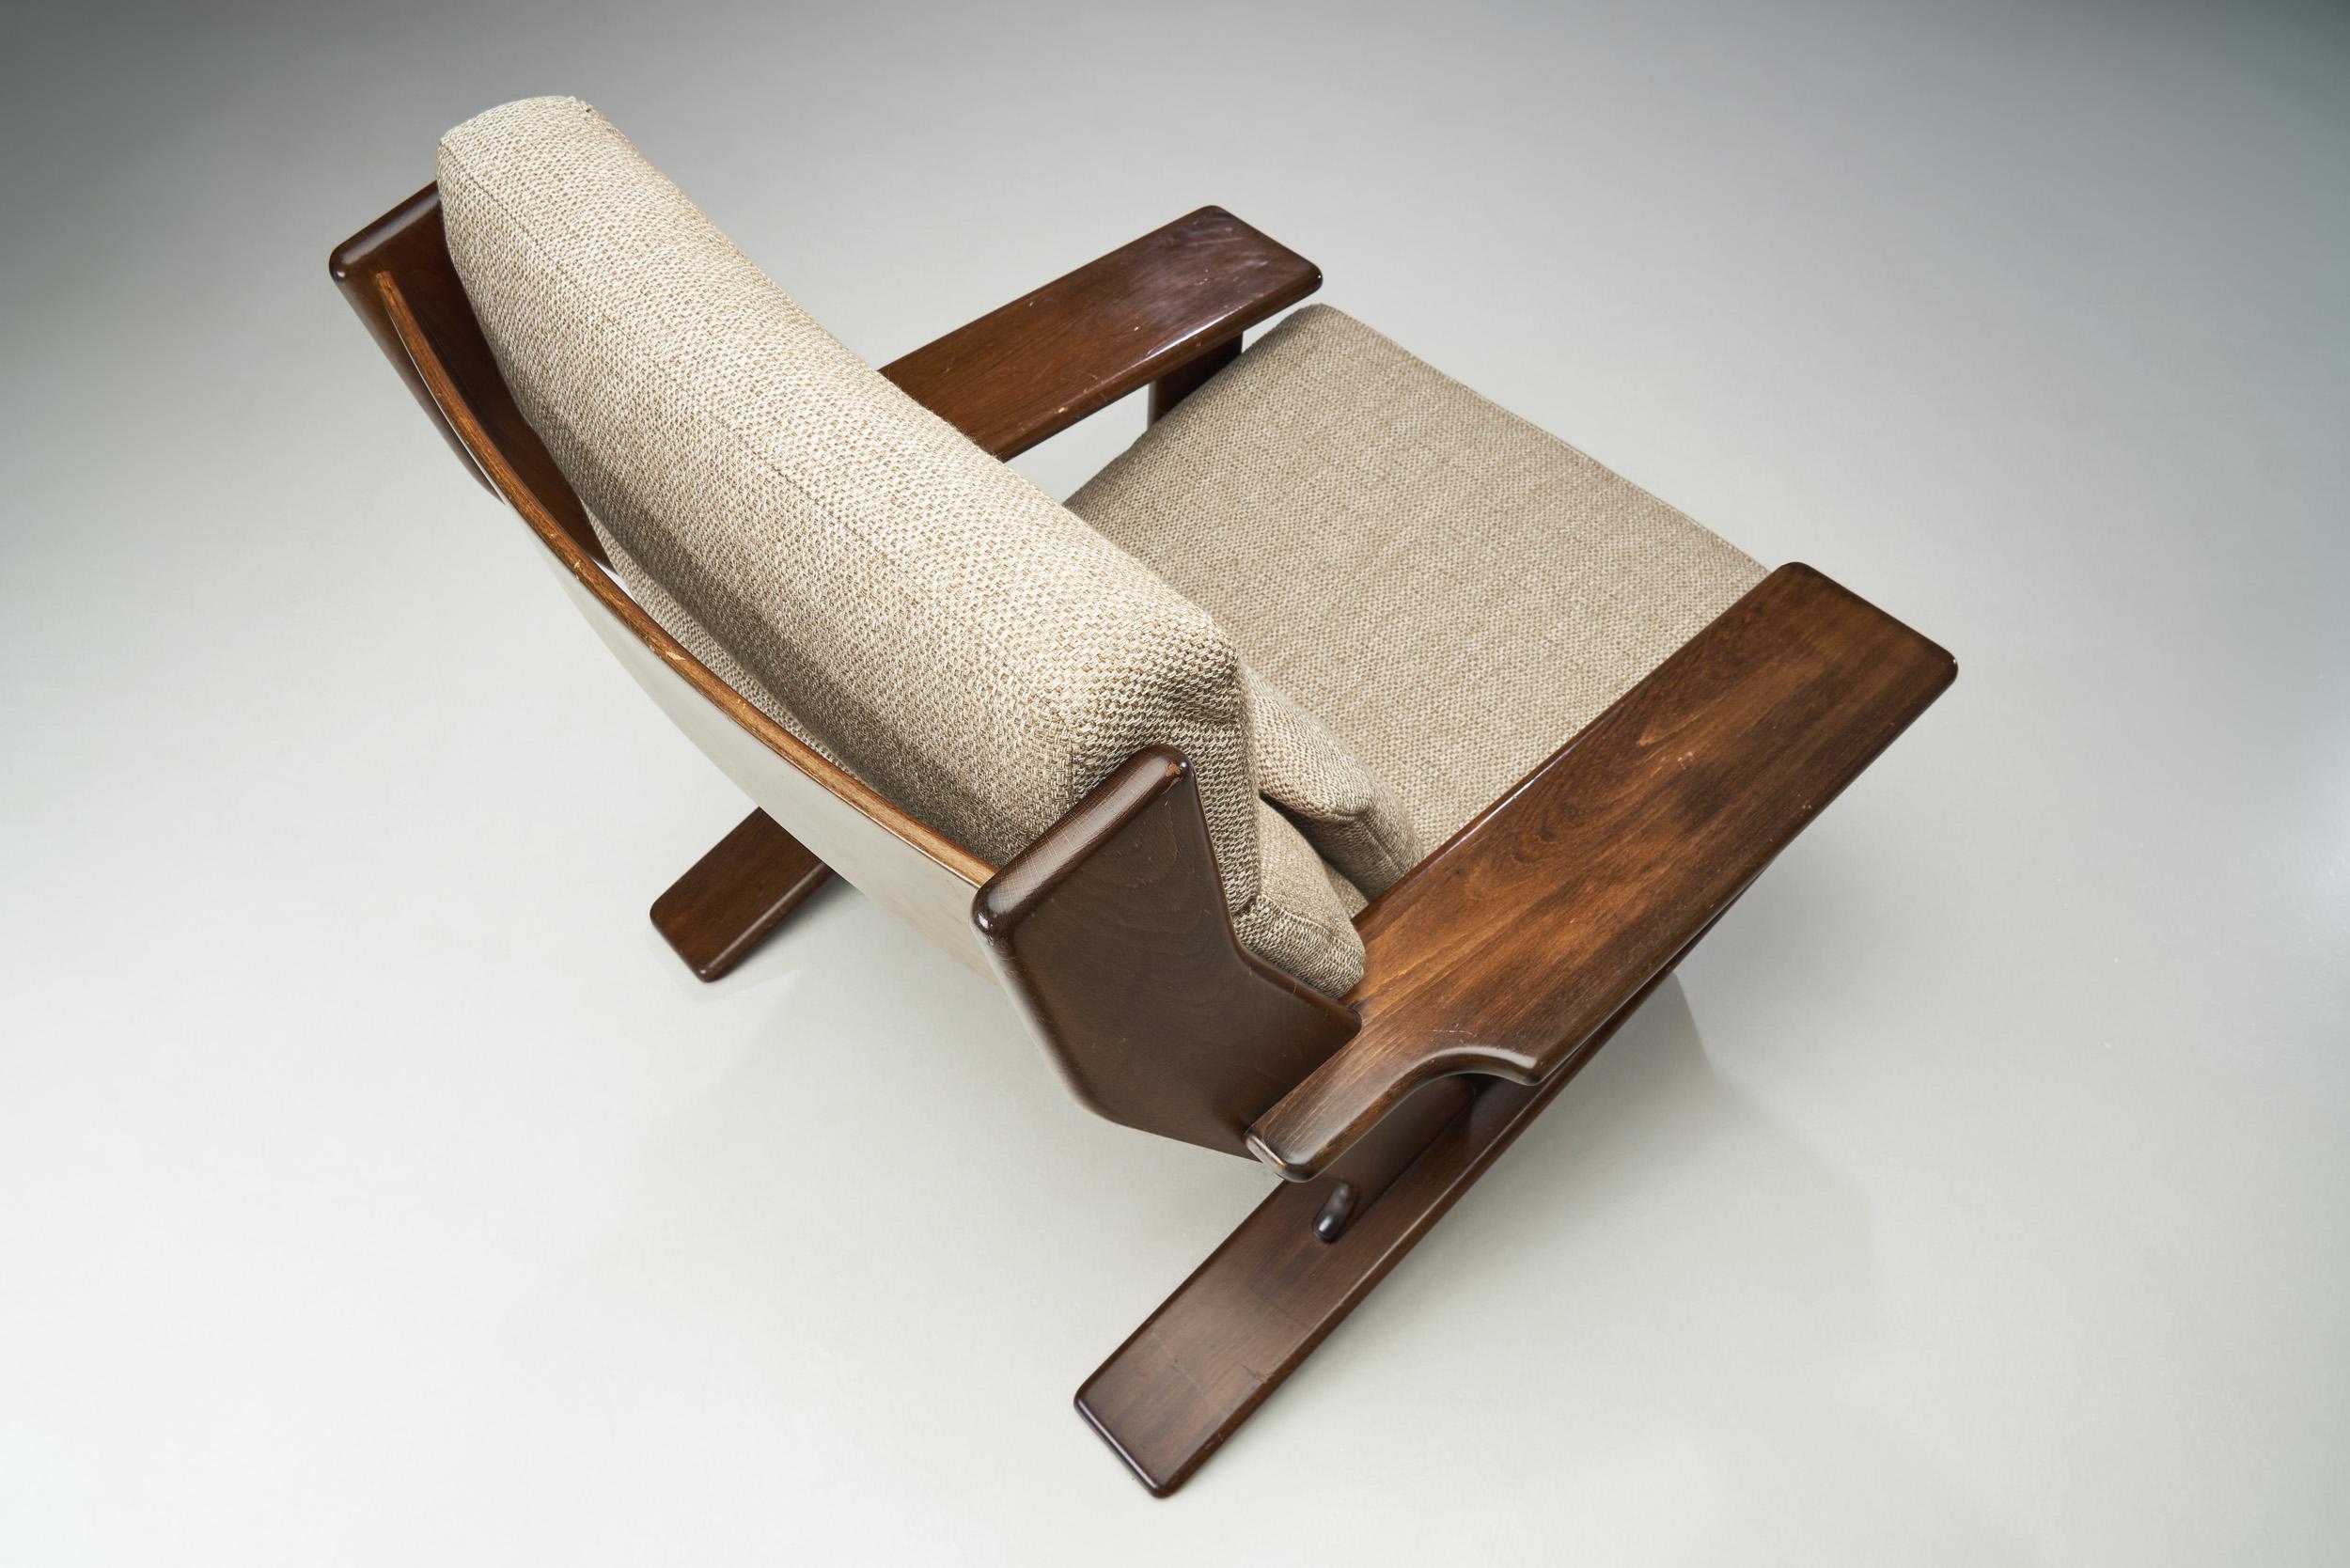 Scandinavian Modern “Pele” Lounge Chair by Esko Pajamies for Lepokalusto, Finland, 1970s